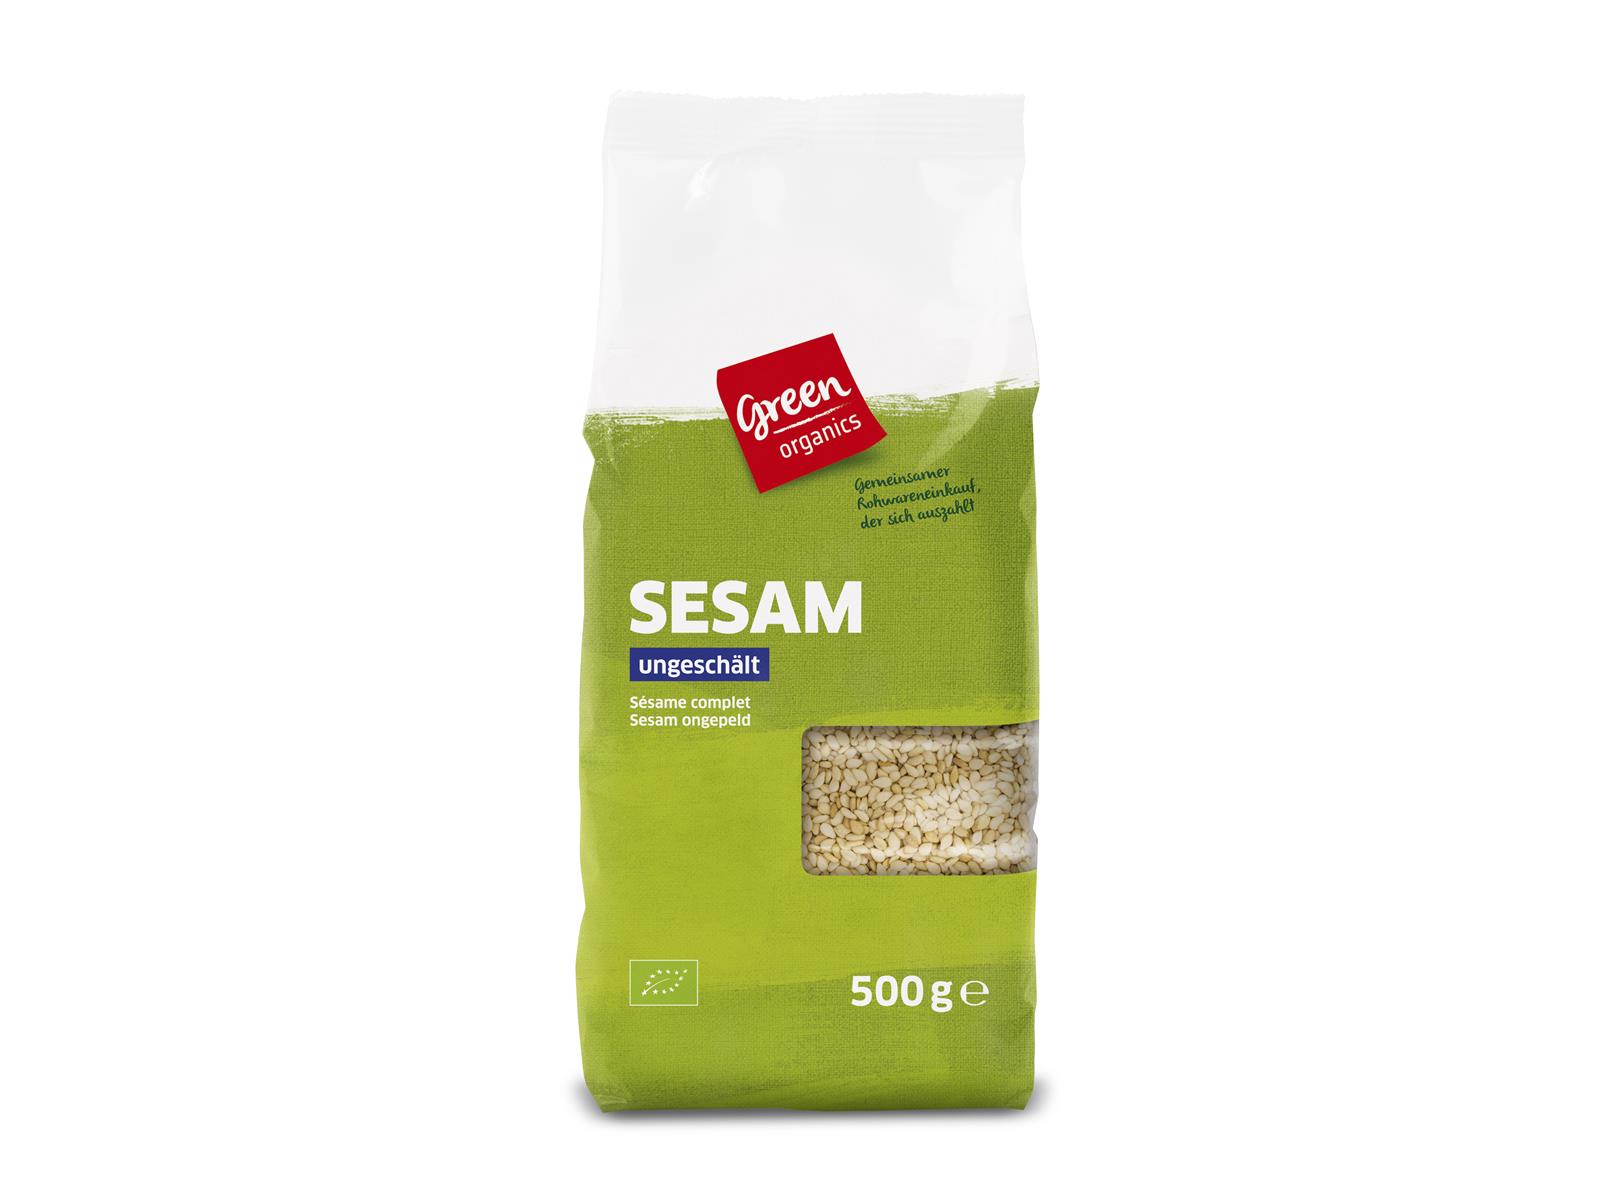 greenorganics Sesam ungeschält 500 g